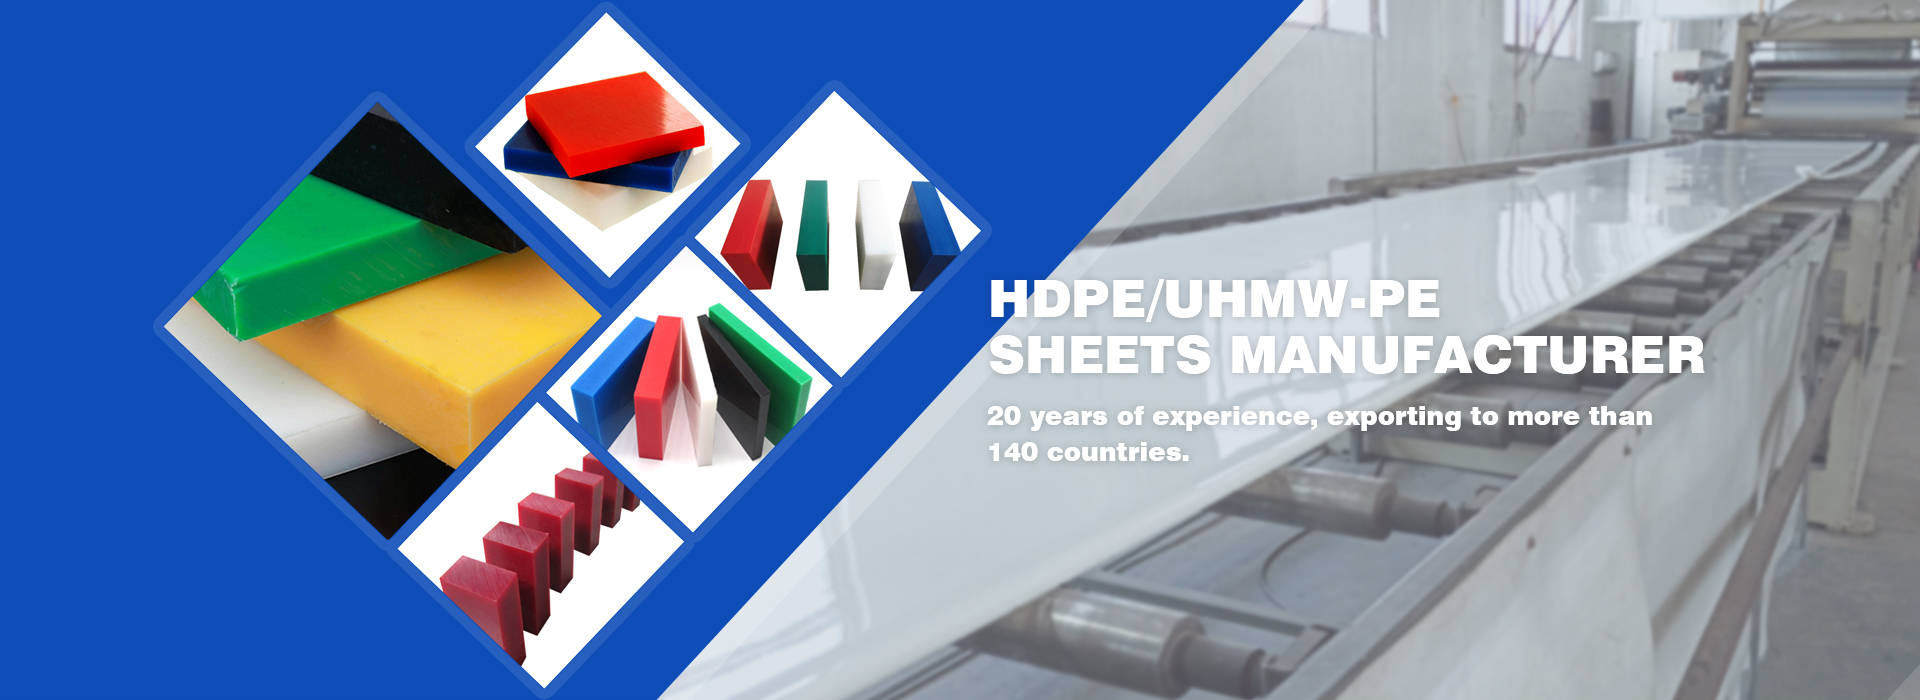 hdpe sheet